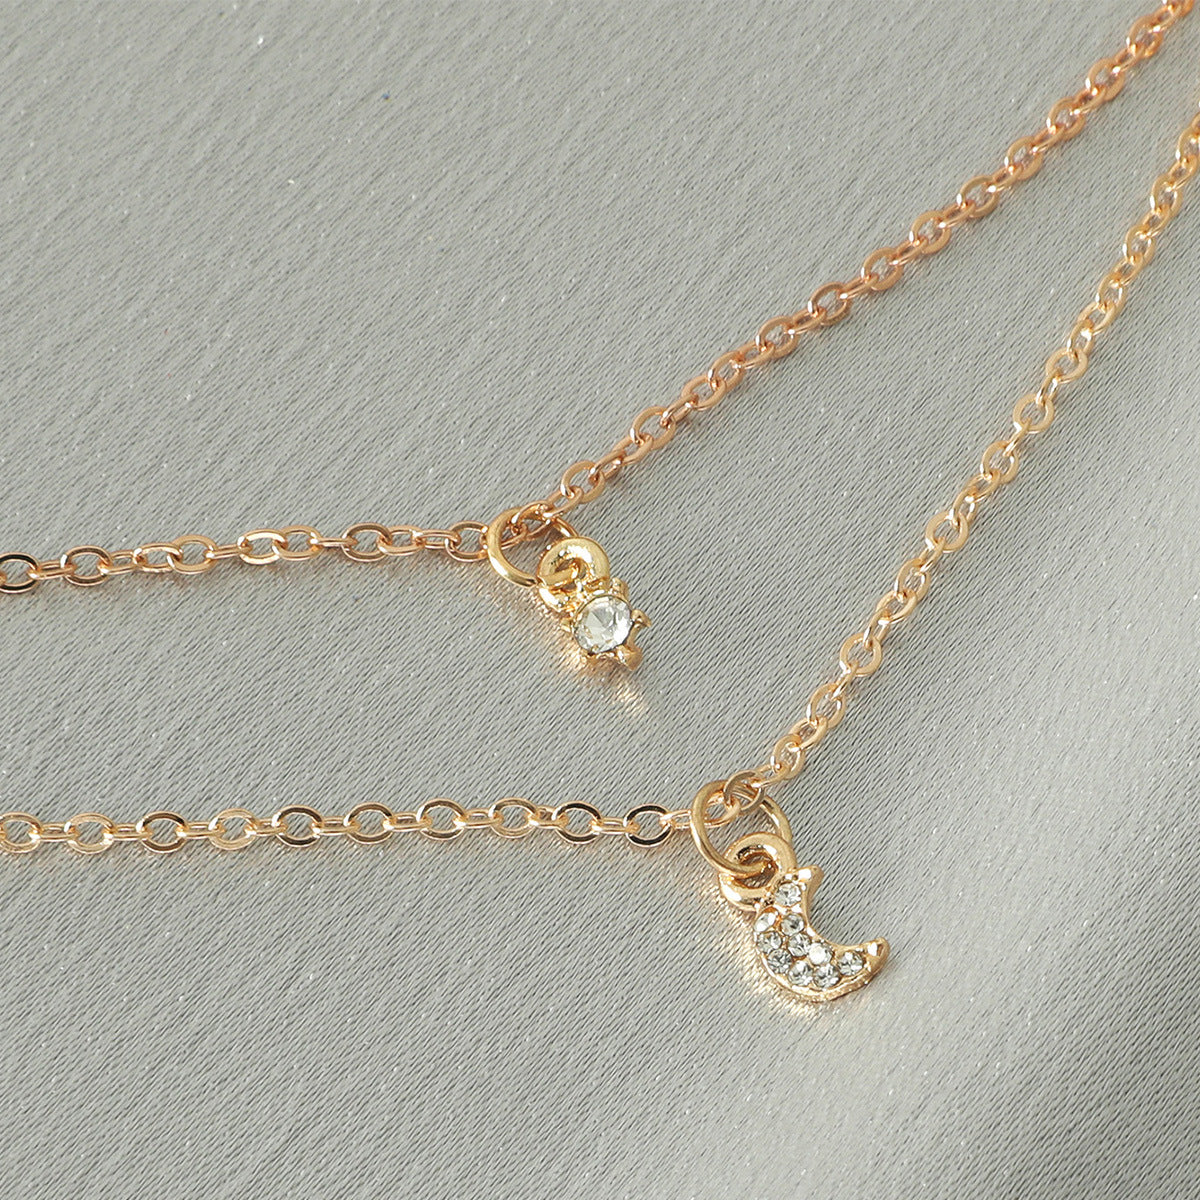 Wholesale Jewelry Star Moon Diamond-studded Pendant Multilayer Necklace Gooddiy